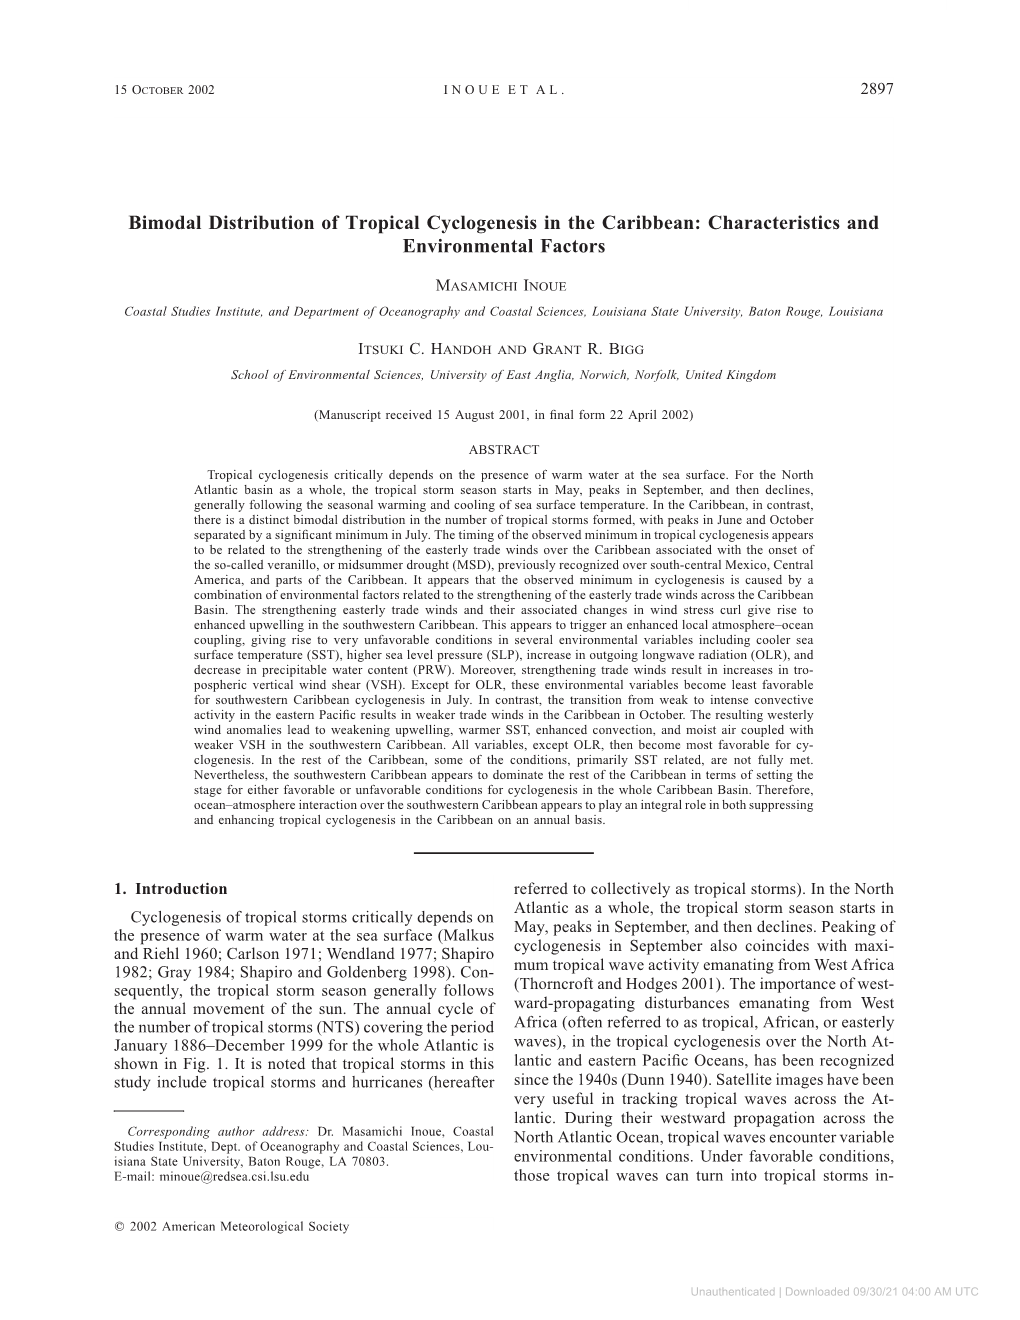 Bimodal Distribution of Tropical Cyclogenesis in the Caribbean: Characteristics and Environmental Factors